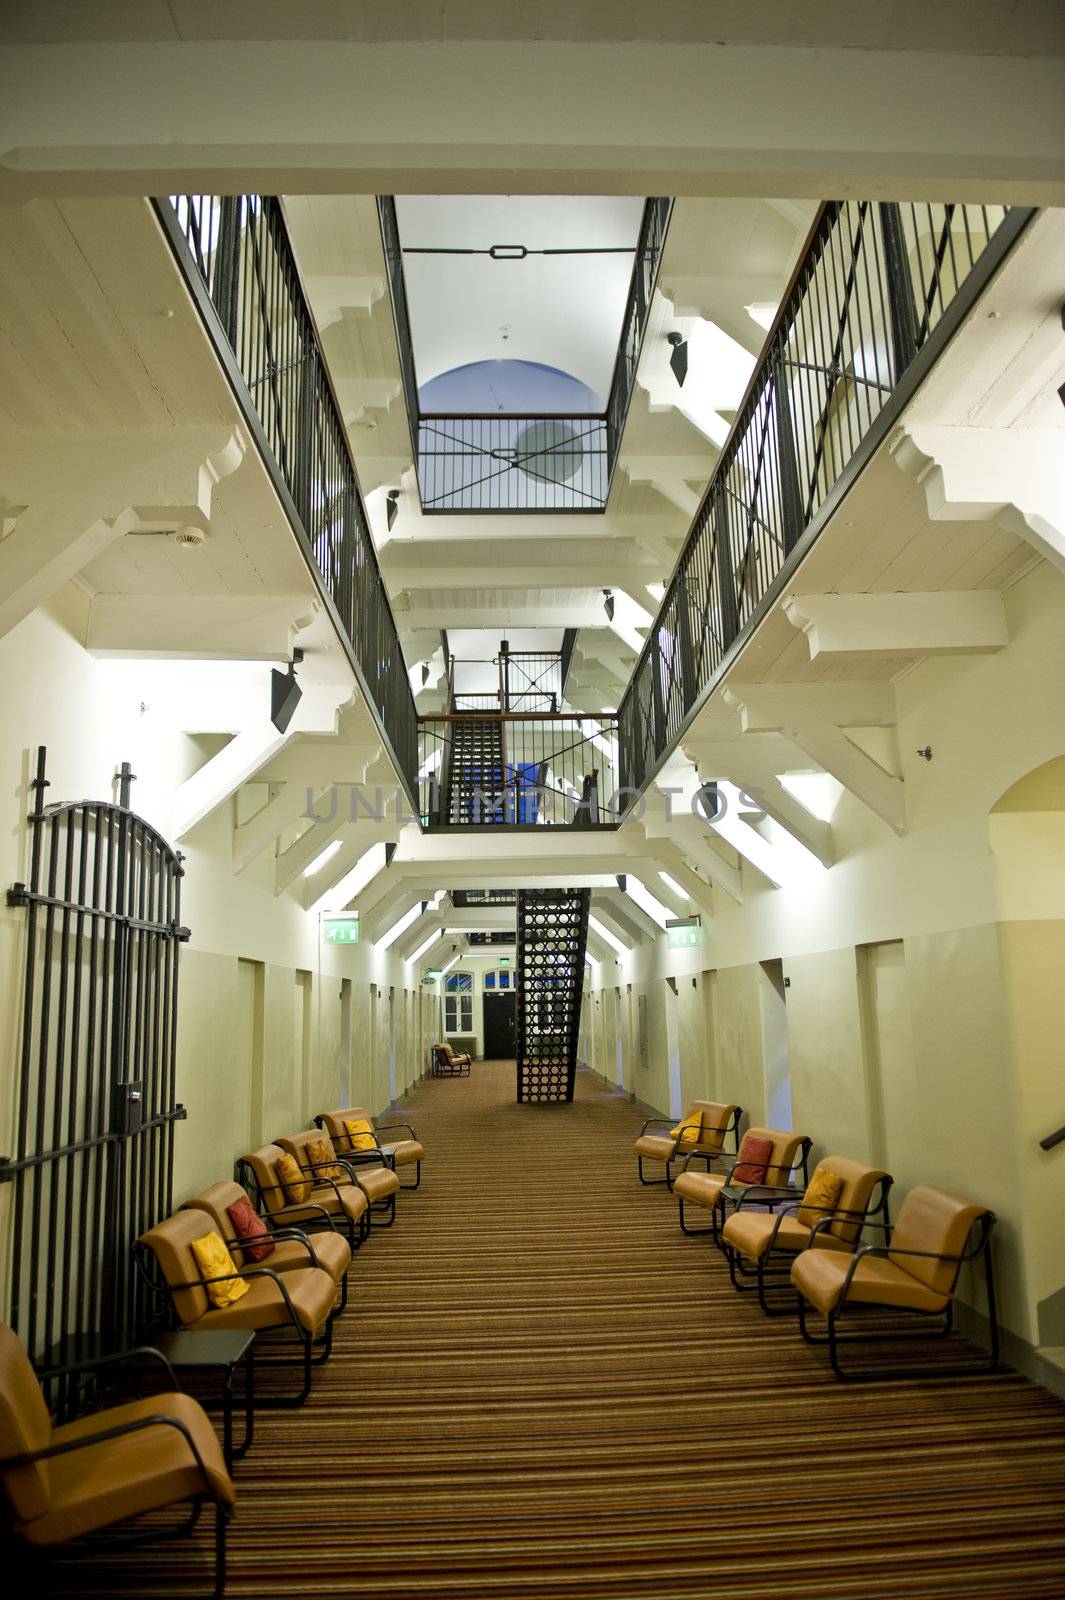 Prison hotel by Alenmax